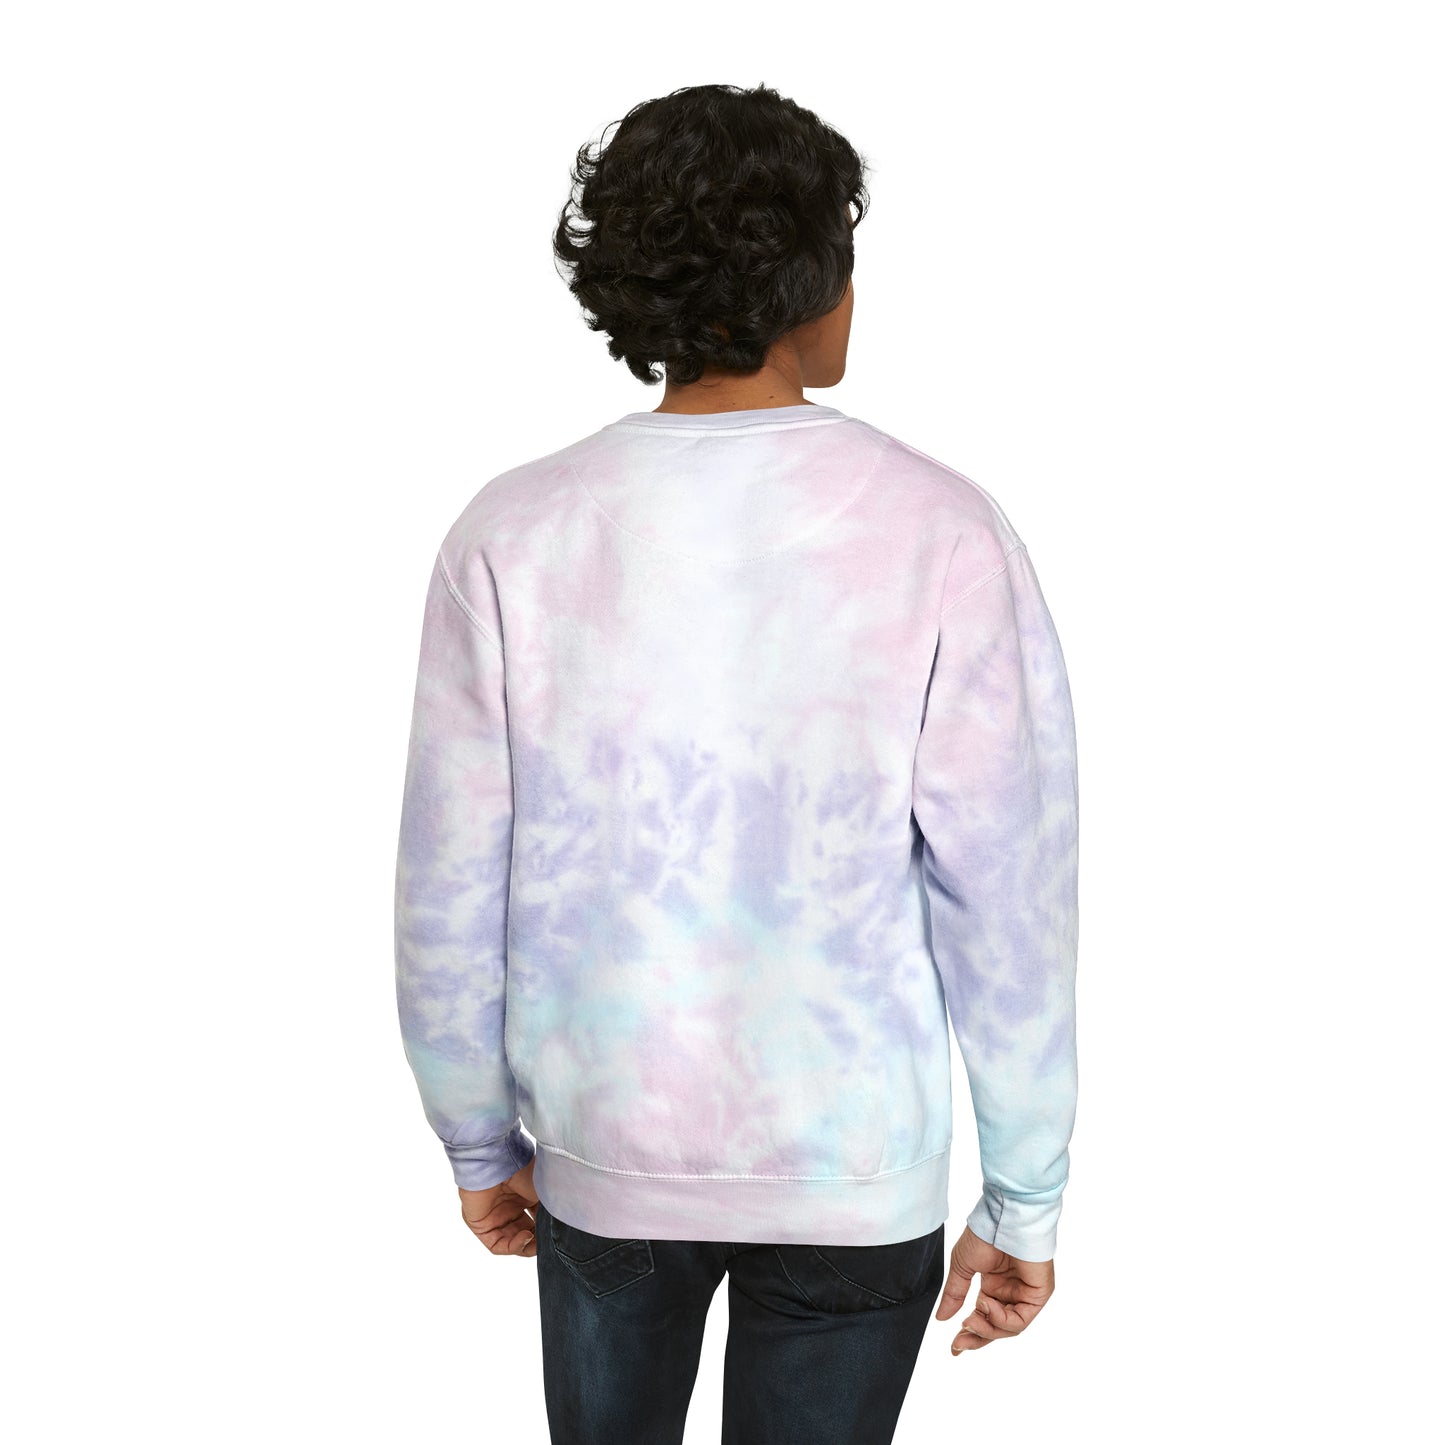 BUDDY CRUISE Unisex Tie-Dye Sweatshirt in 3 Colors